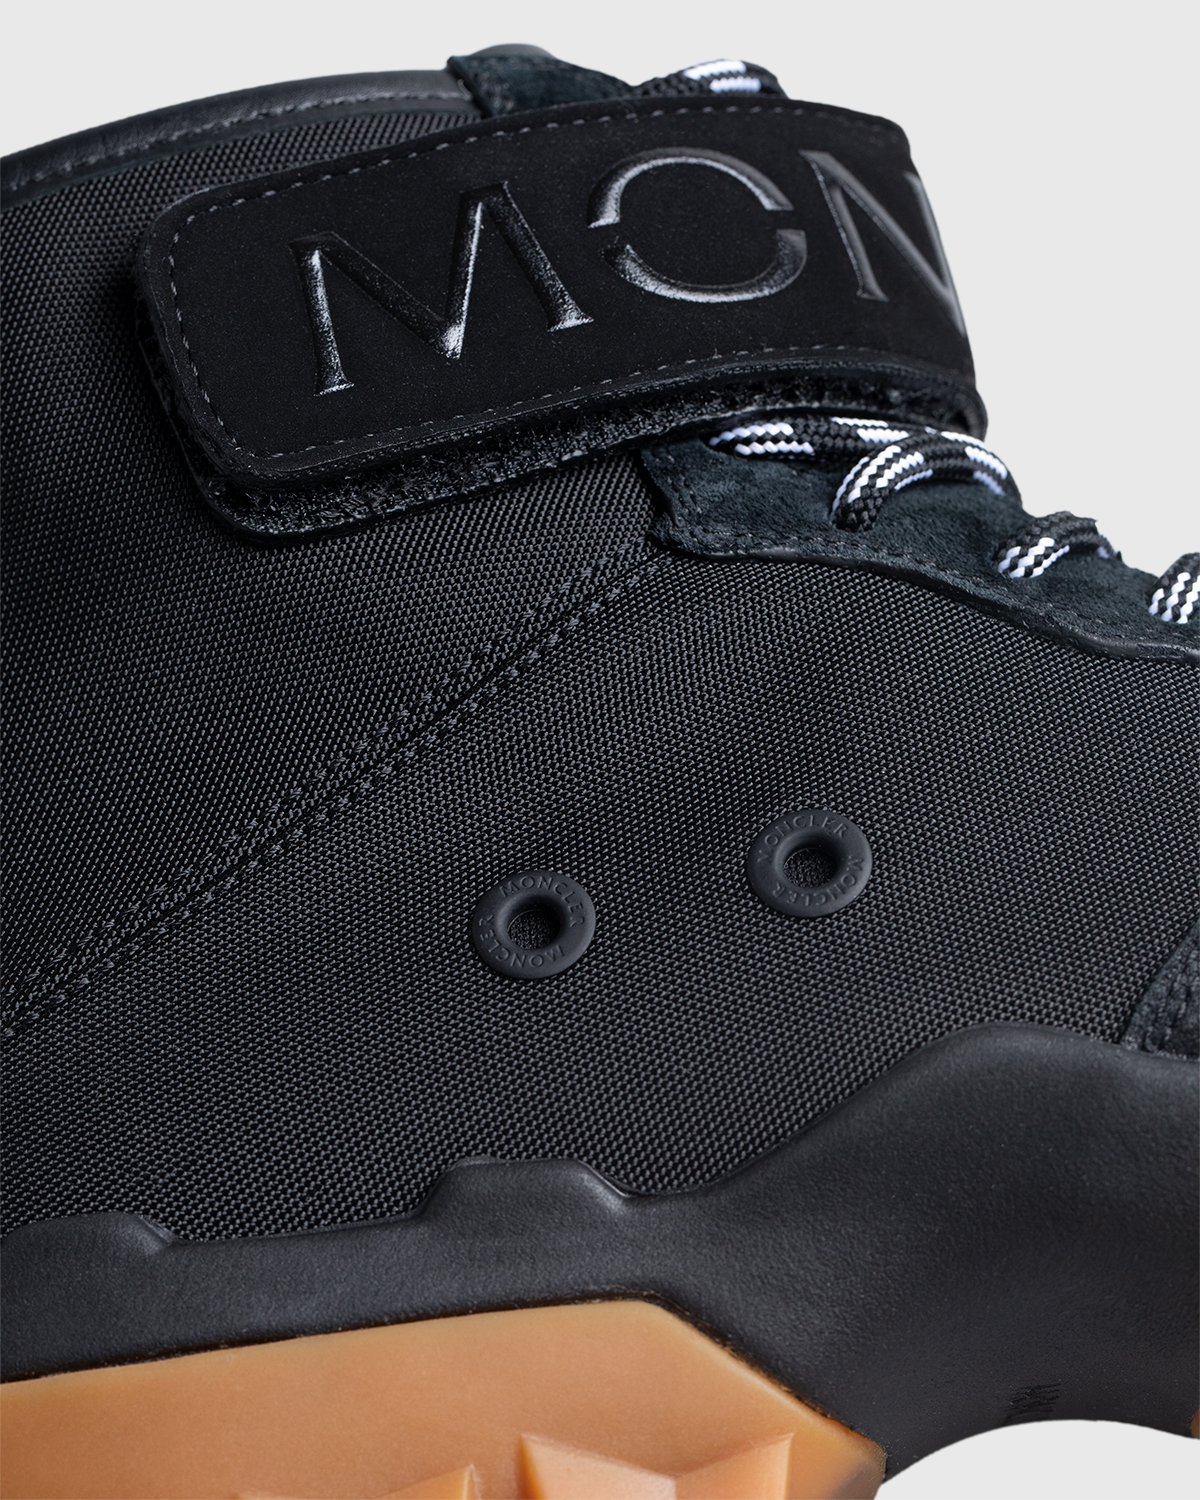 Moncler Genius - Recycled Hugo Shoes - Footwear - Black - Image 6